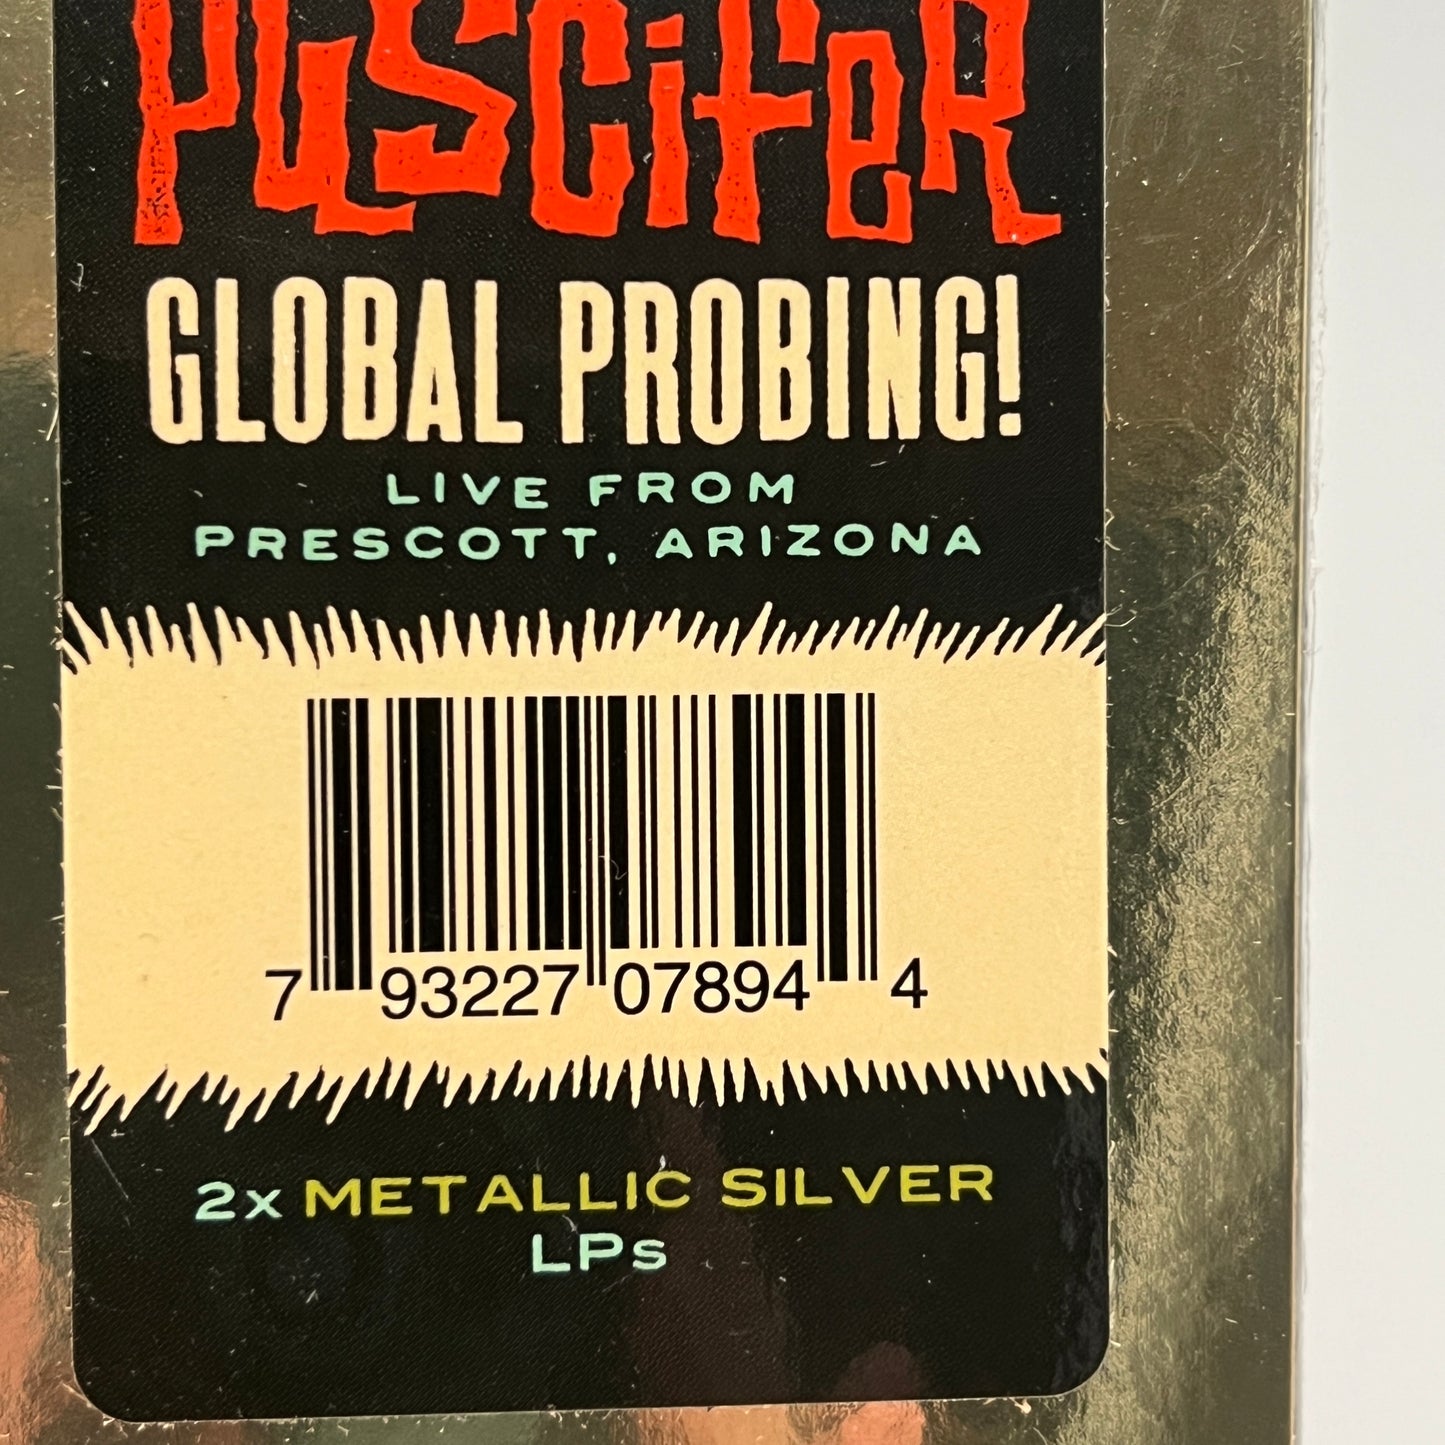 Puscifer - Global Probing! Live From Prescott Arizona Vinyl LP Metallic Silver SEALED